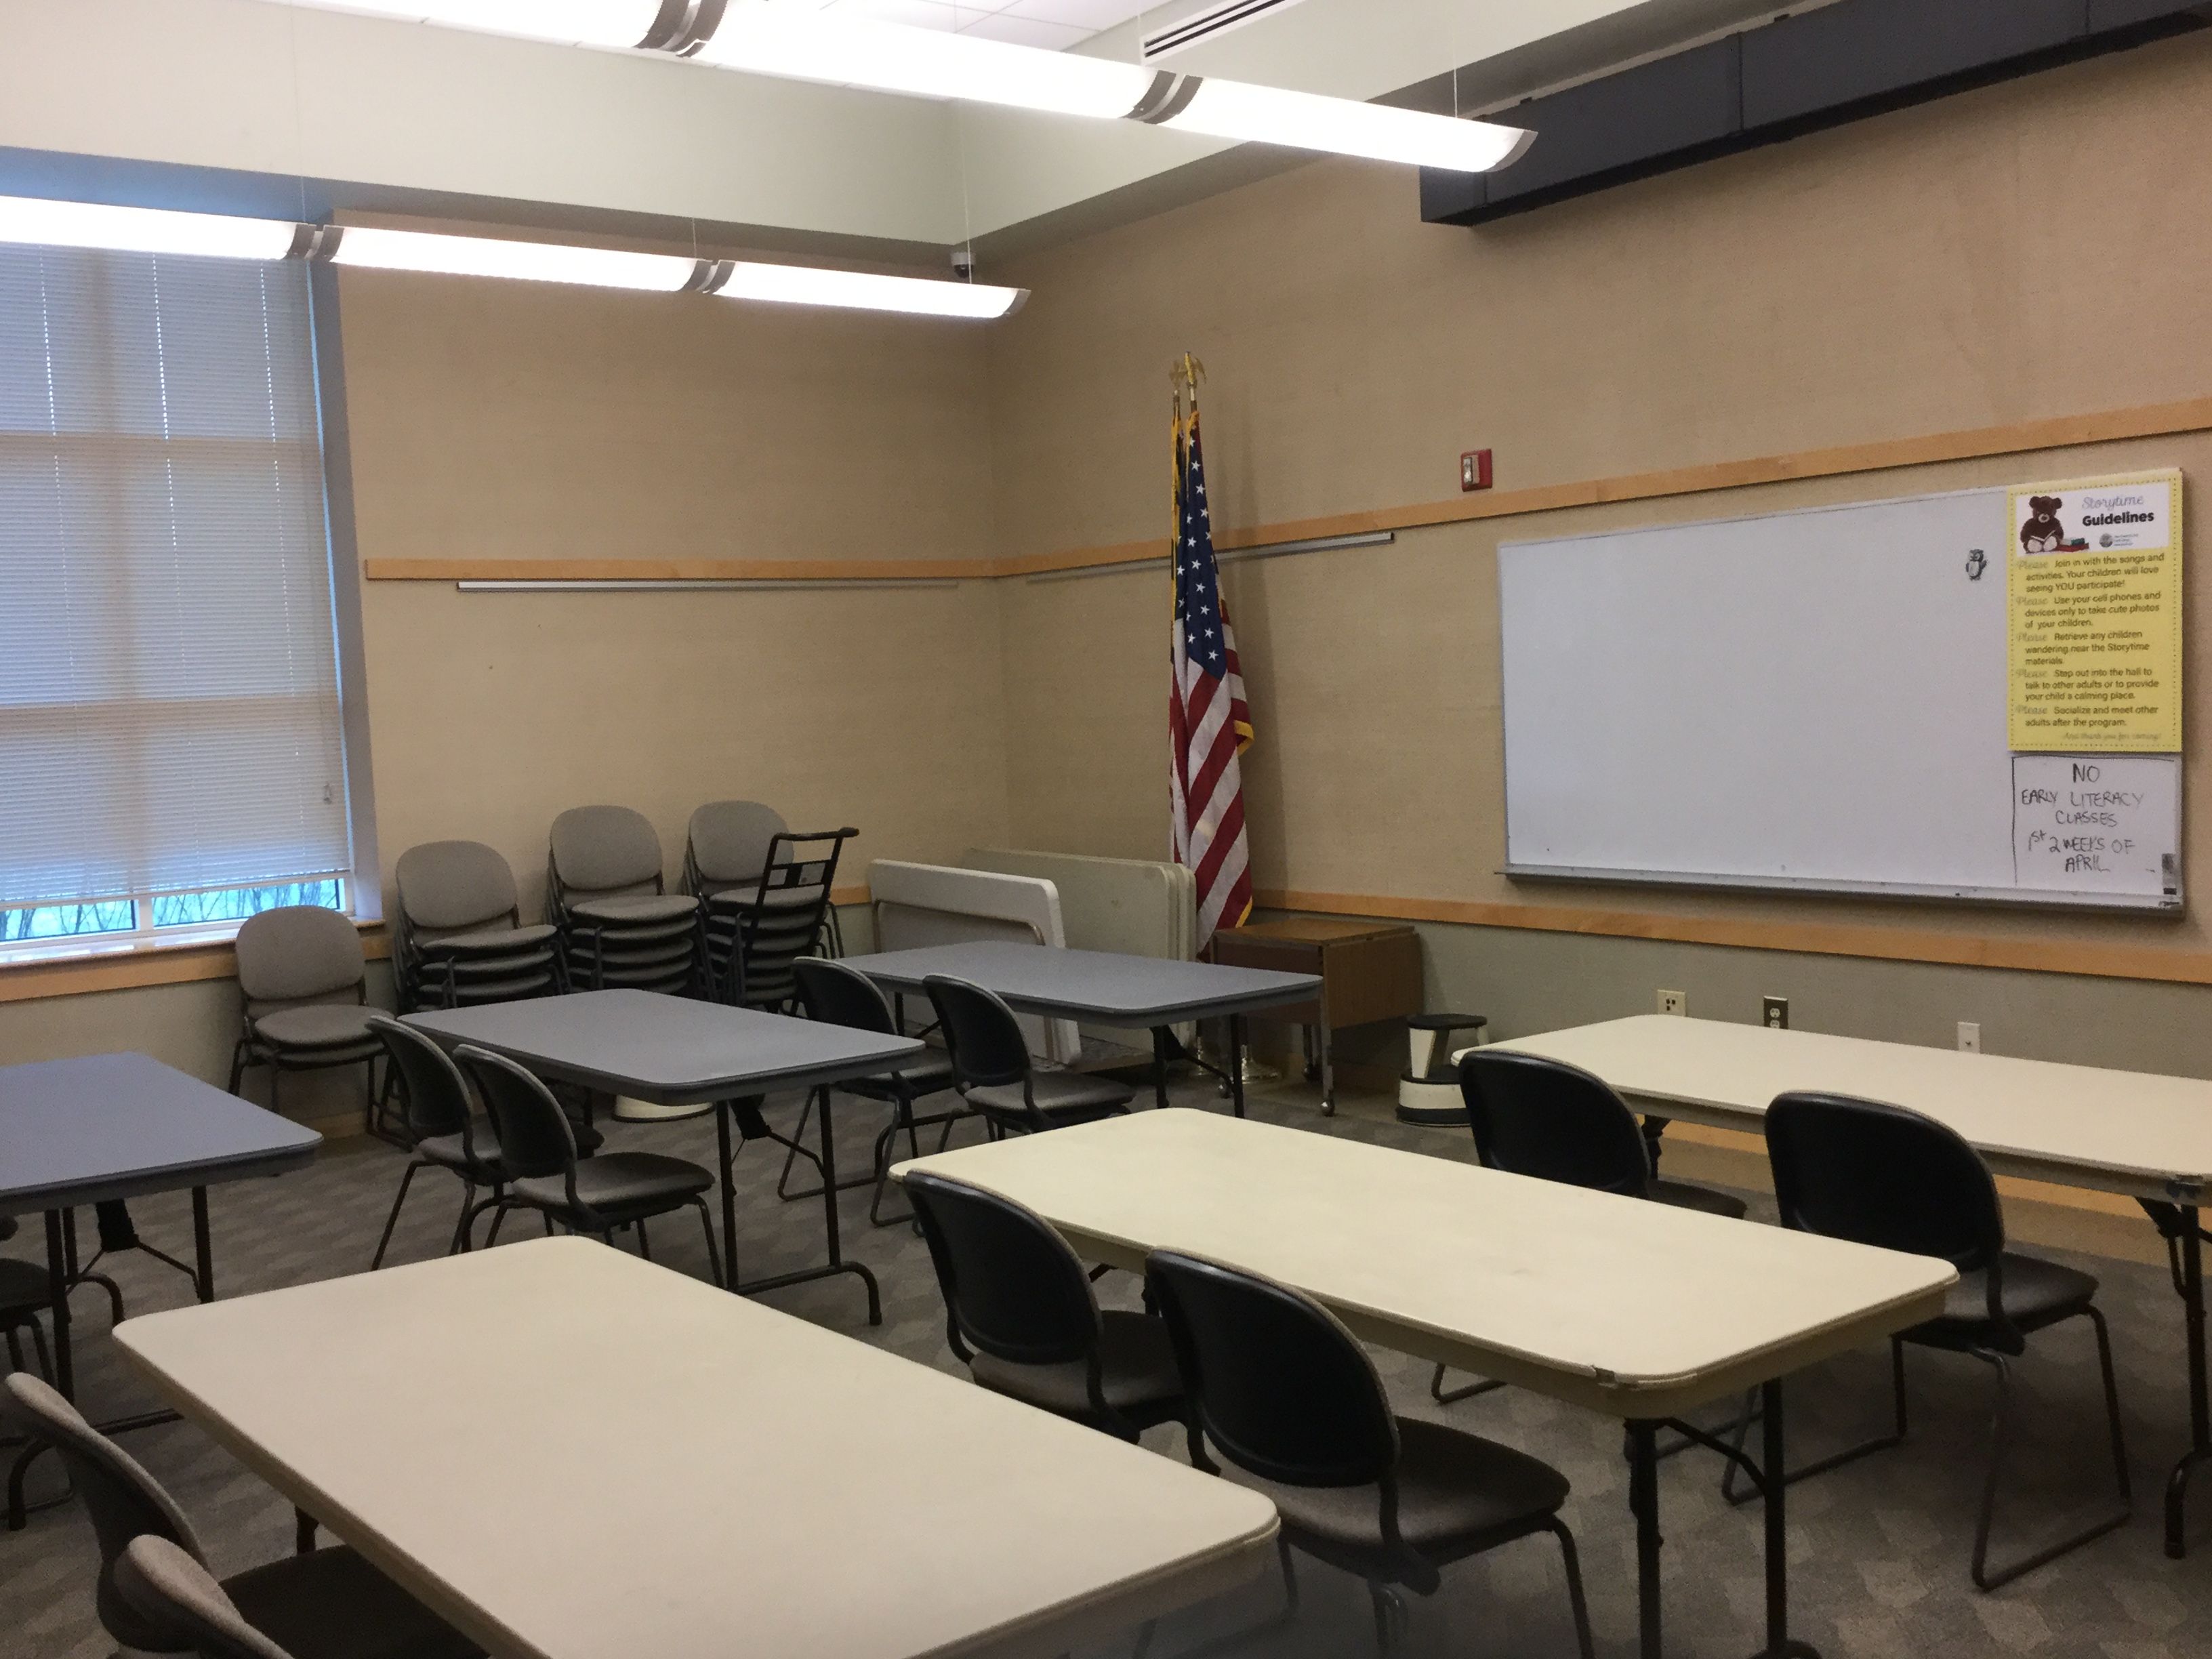 Crofton Meeting Room B setup in classroom-style